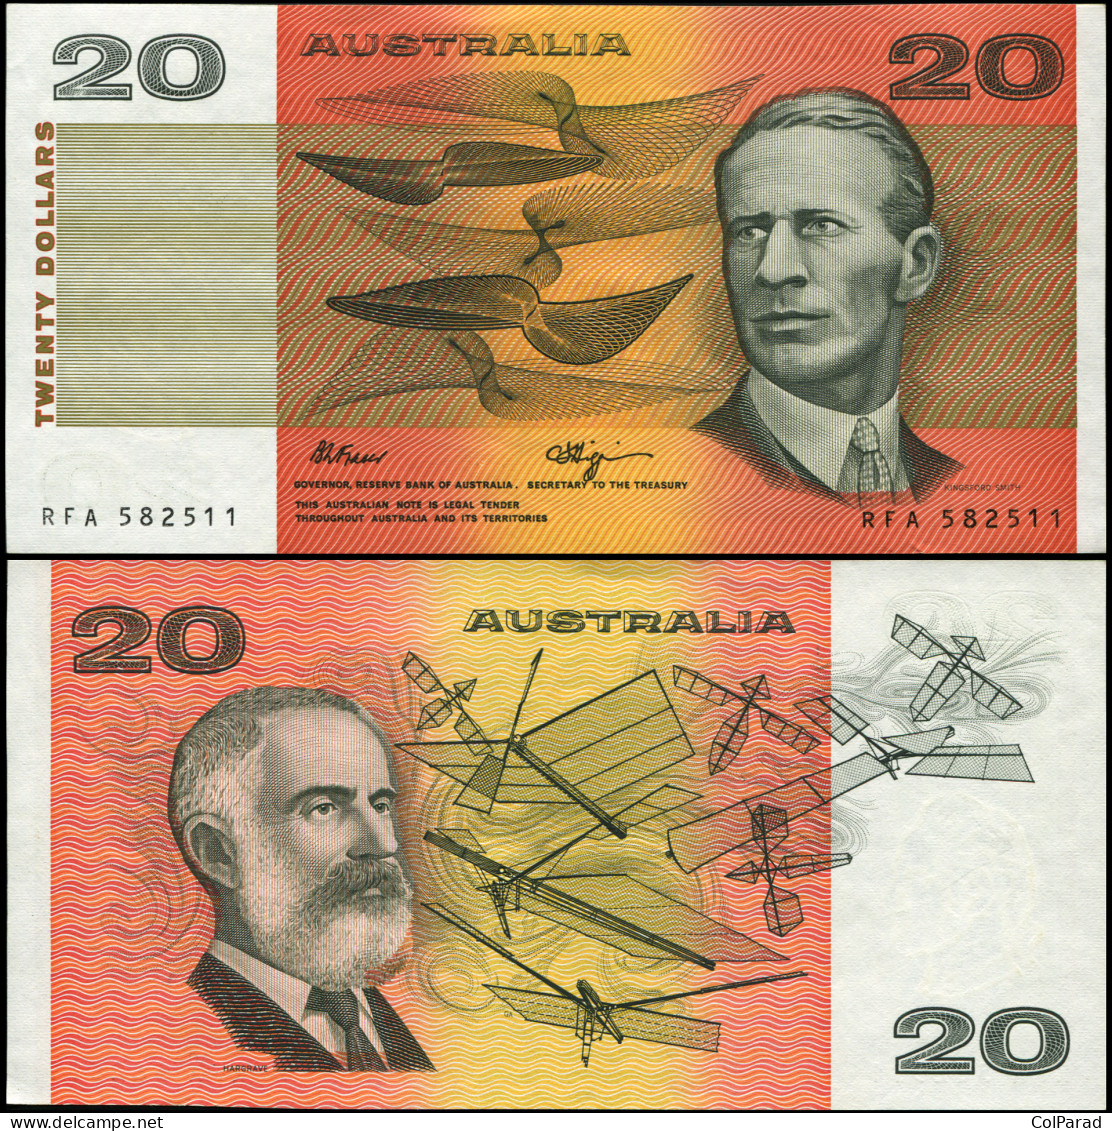 AUSTRALIA 20 DOLLARS - ND (1989) - Paper Unc - P.46i Banknote - 1974-94 Australia Reserve Bank